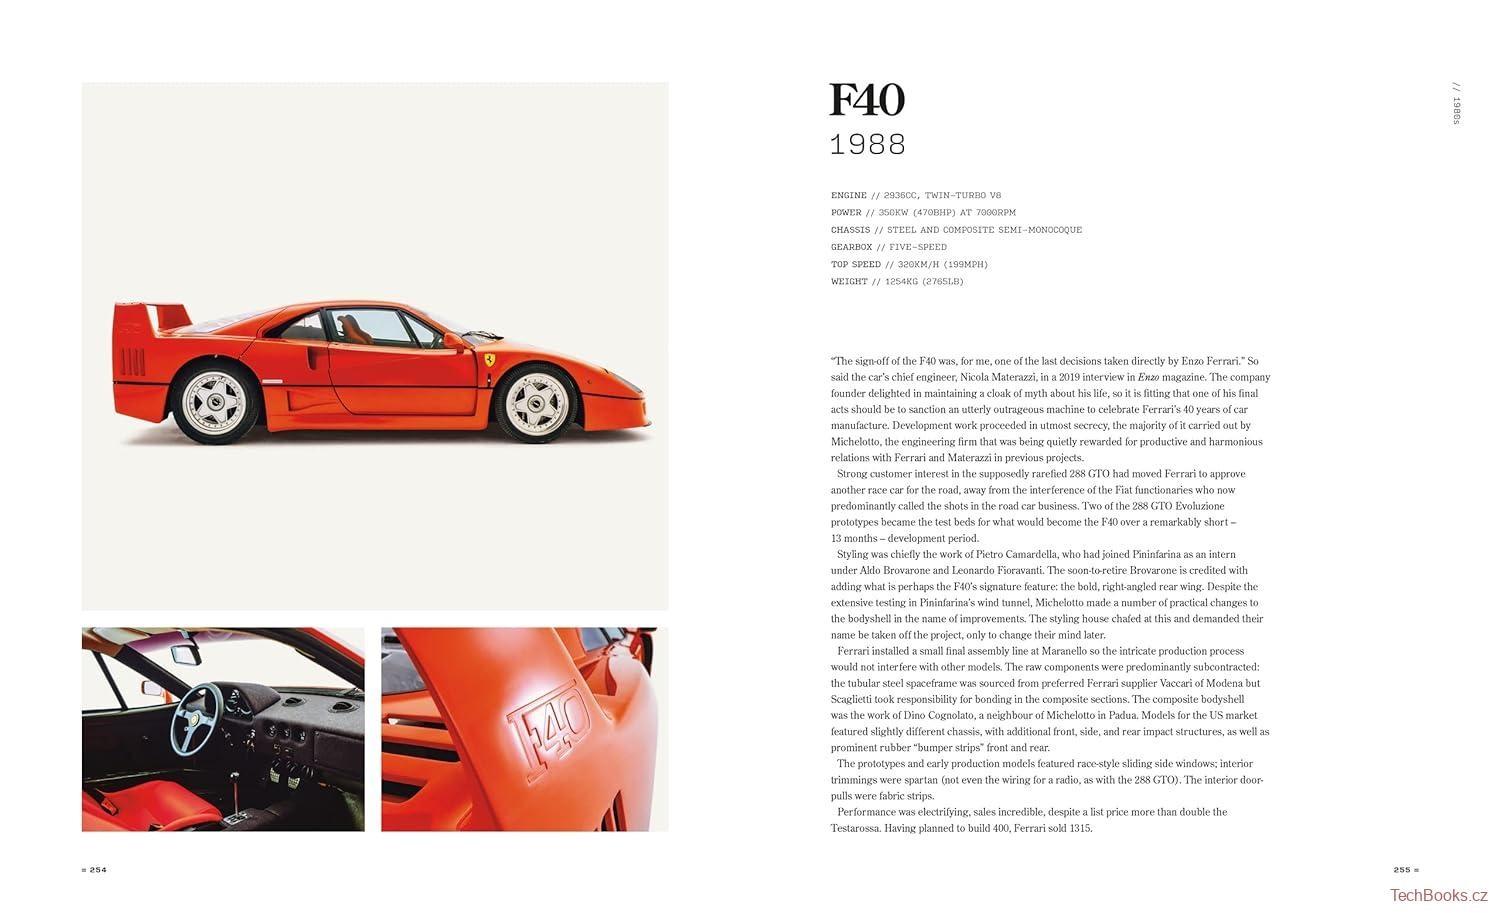 A DREAM IN RED Ferrari by Maggi & Maggi 